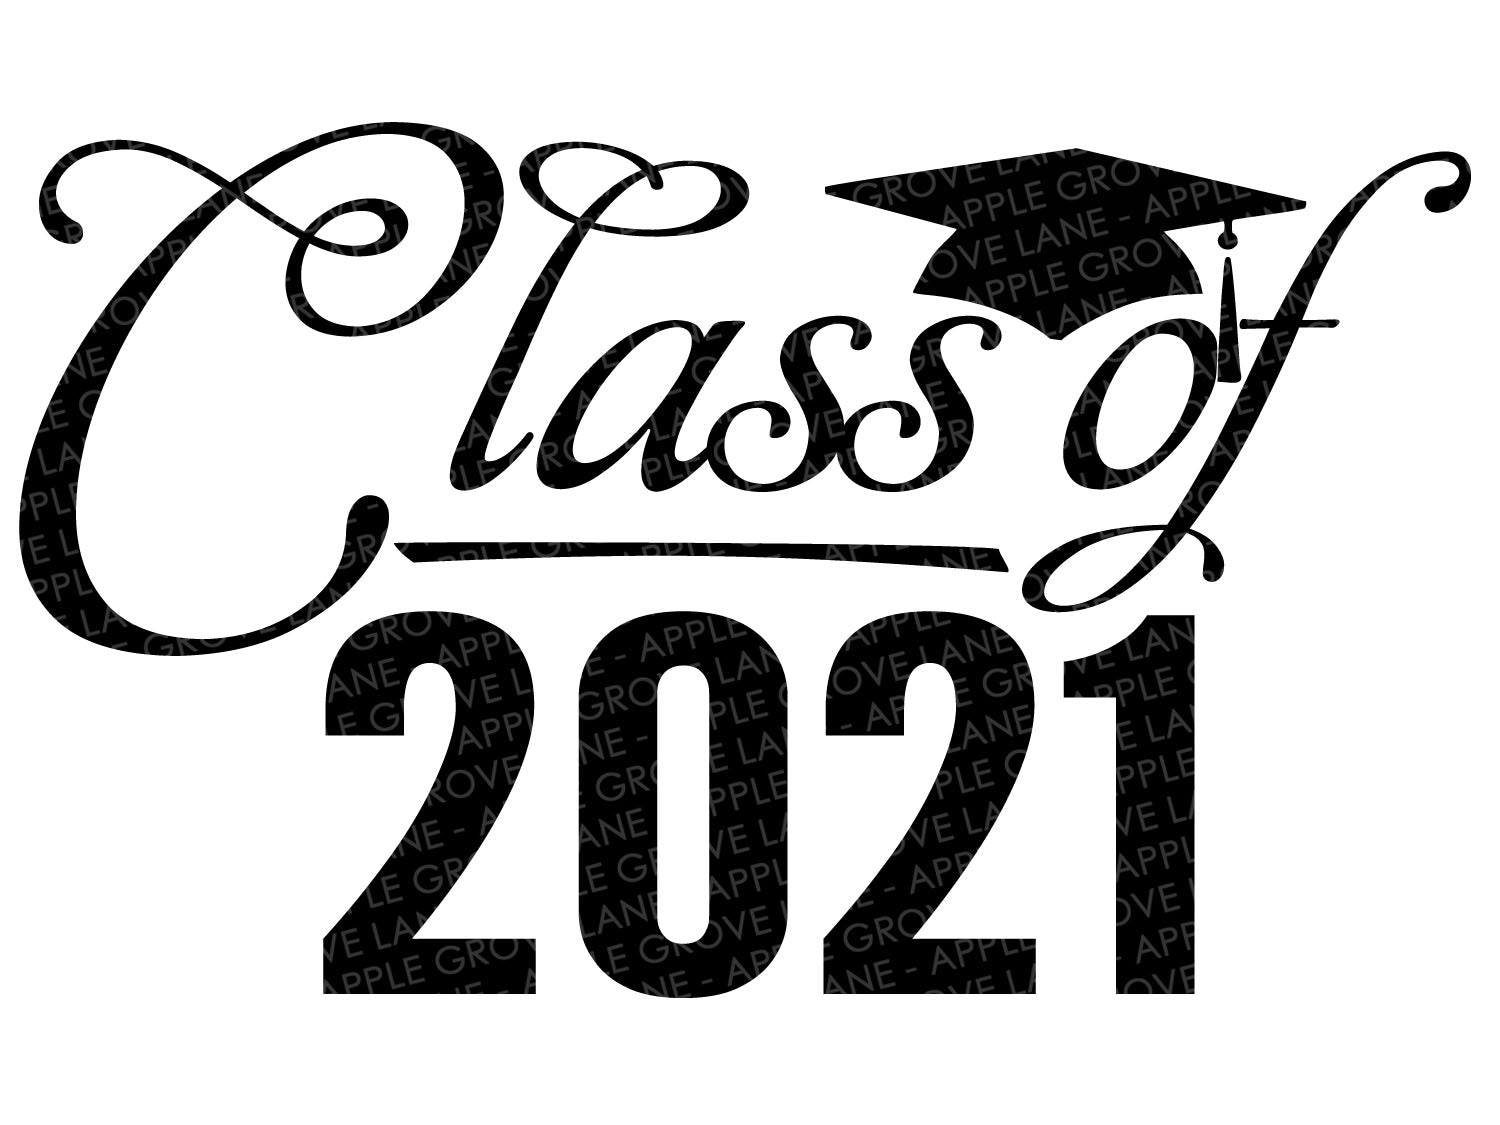 Download Class Of 2021 Svg Graduation Svg 2021 Svg 2021 Graduation Svg Apple Grove Lane